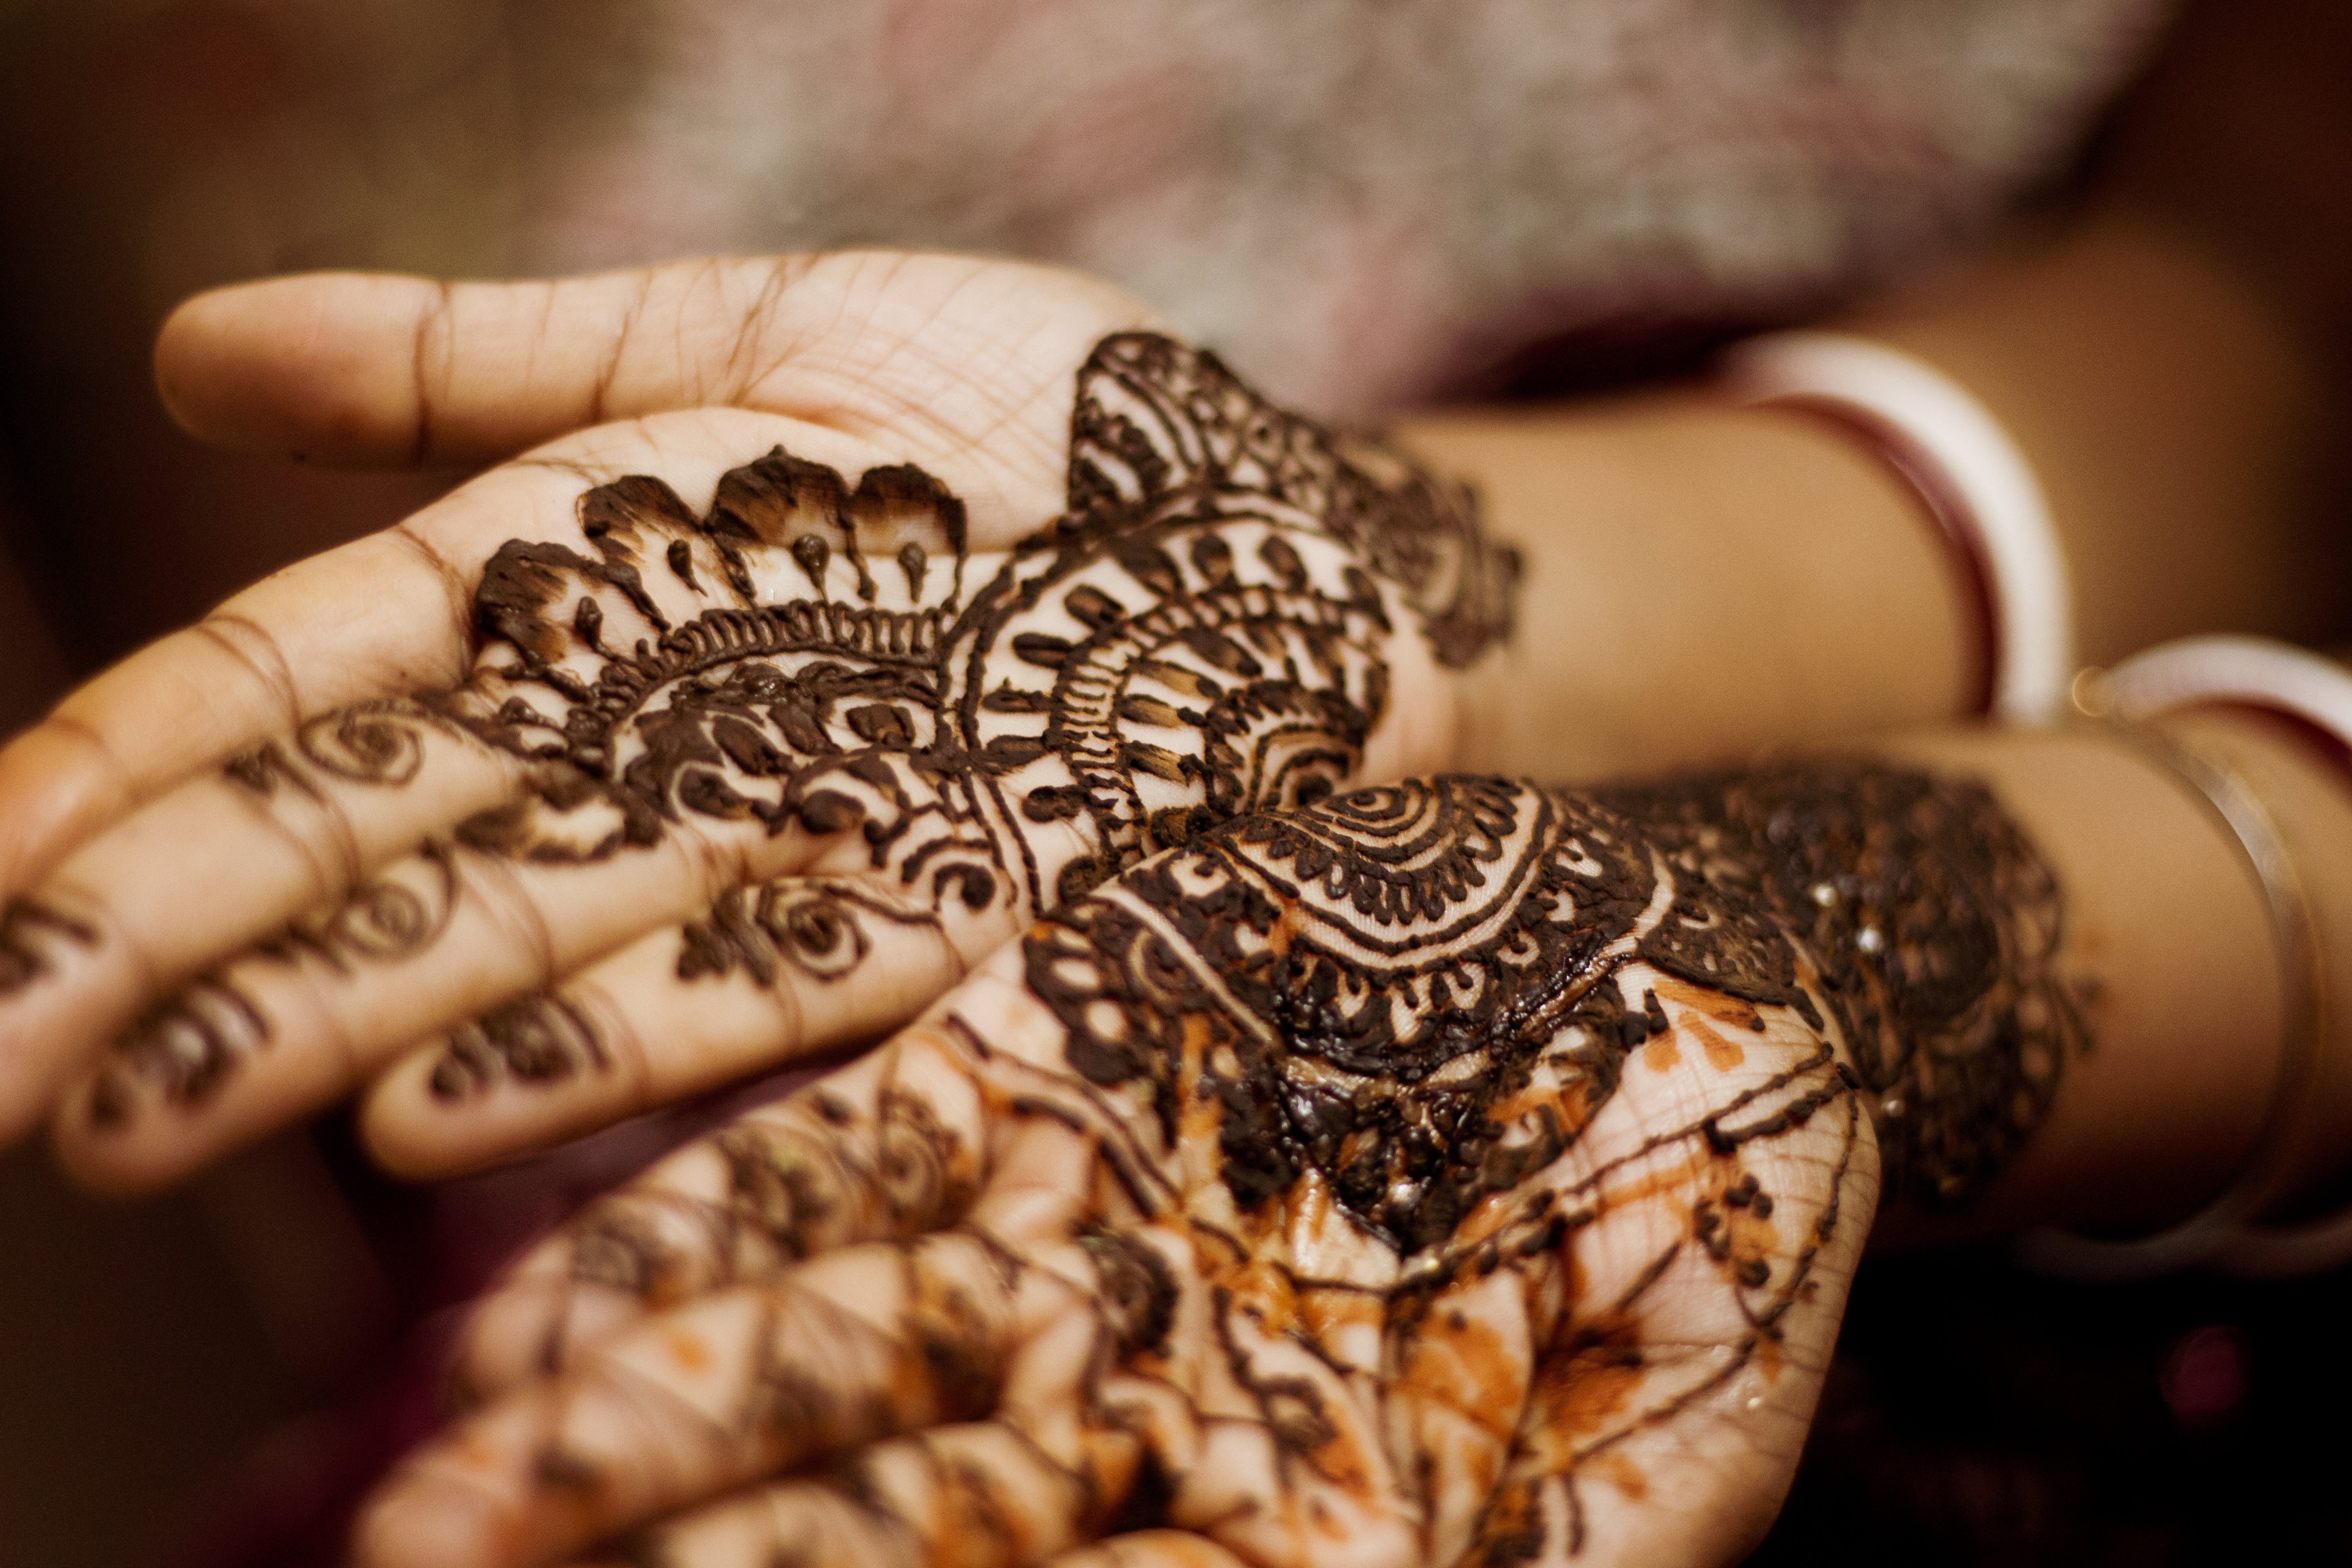 High Quality Stock Photos of henna